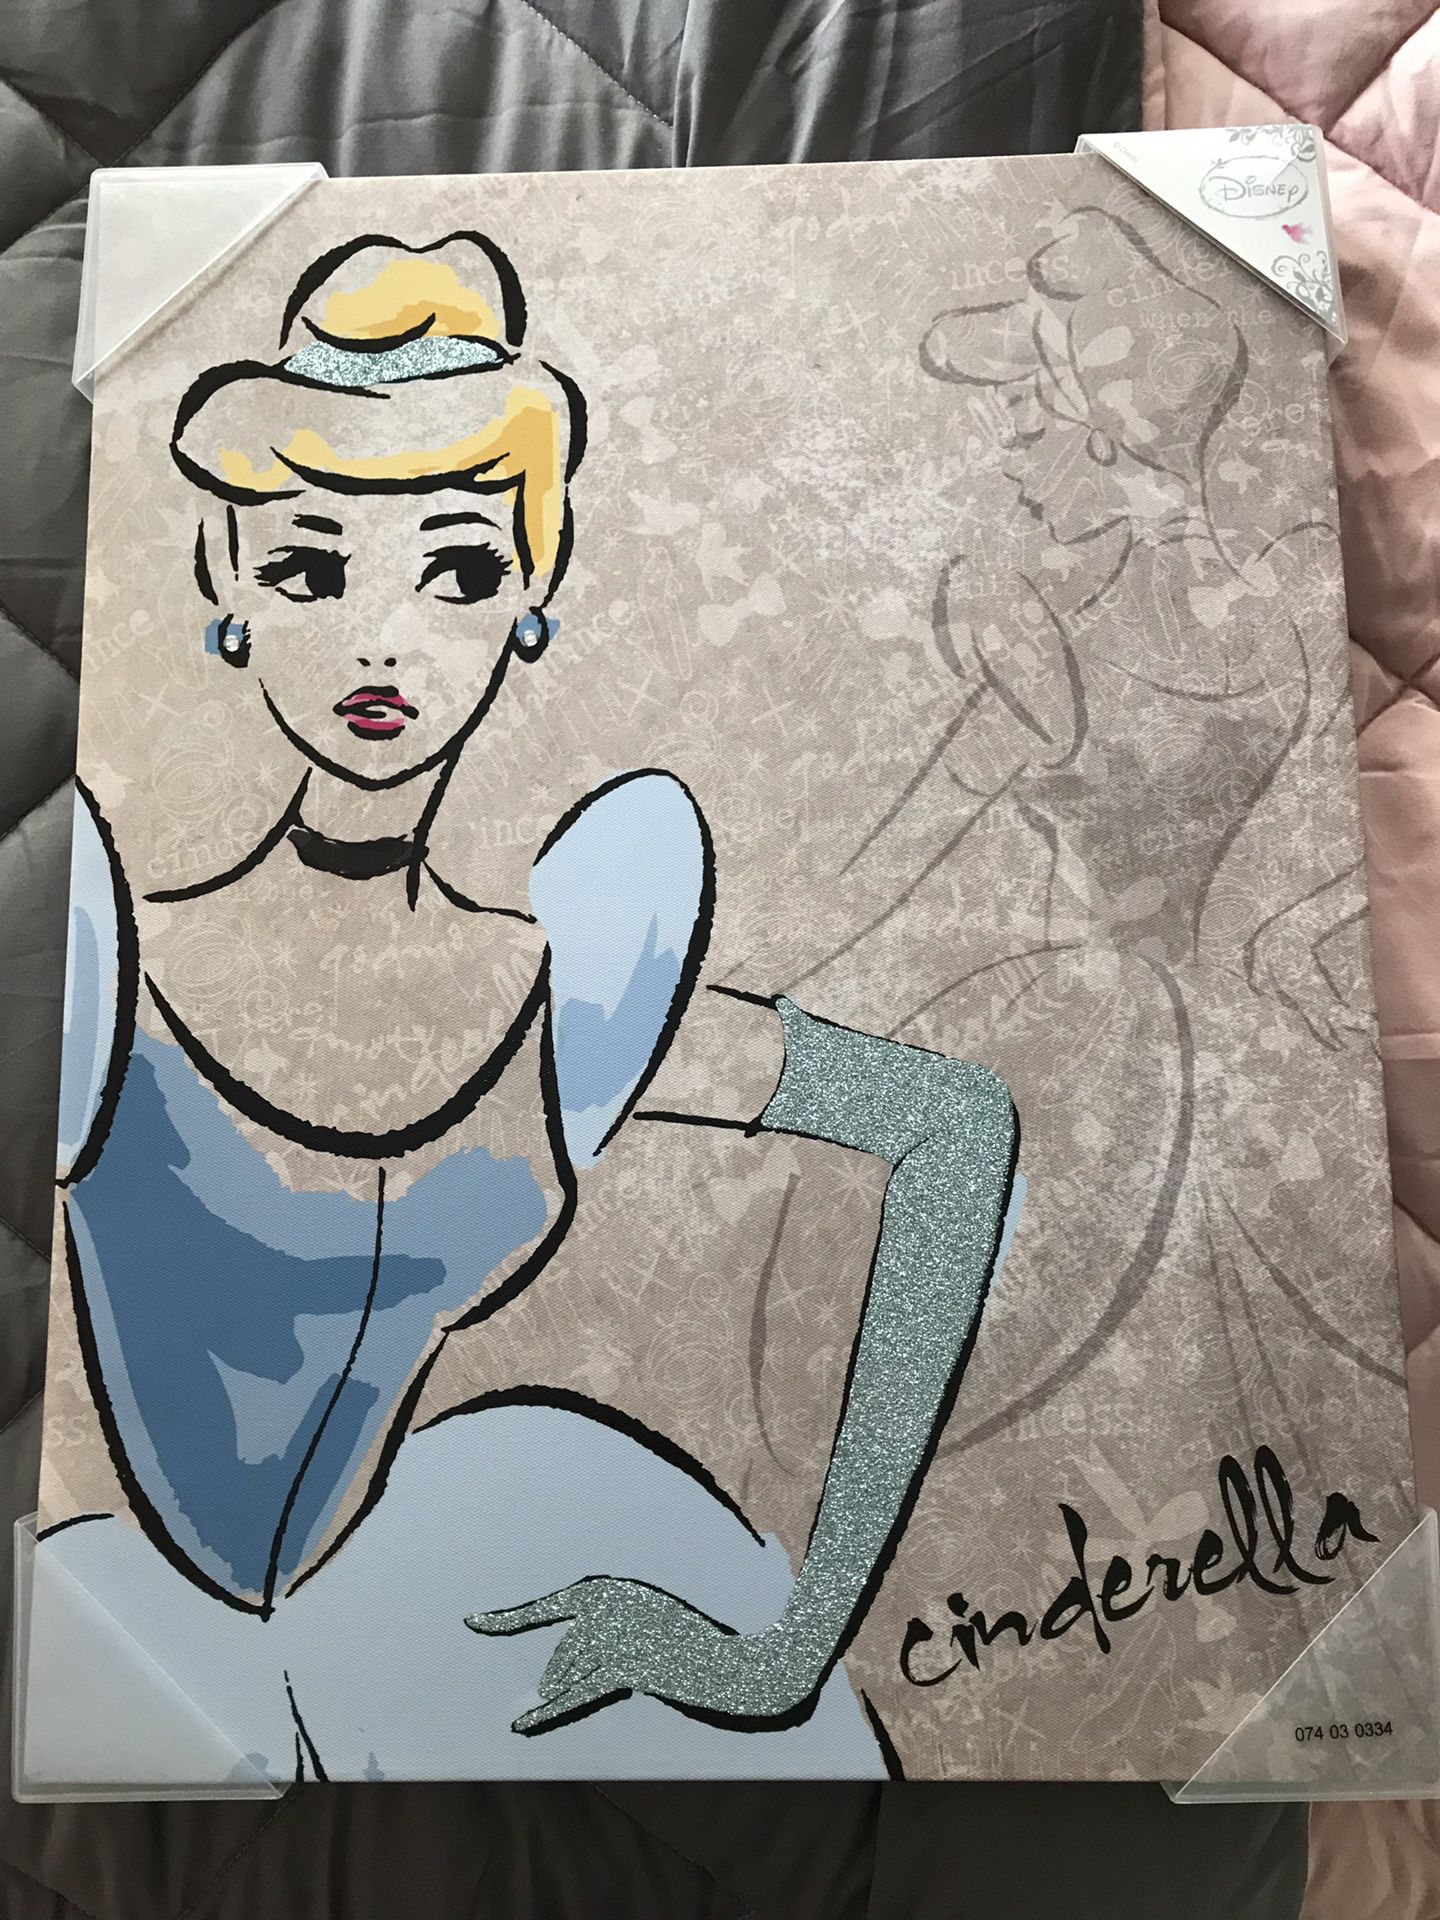 New Disney Cinderella canvas print